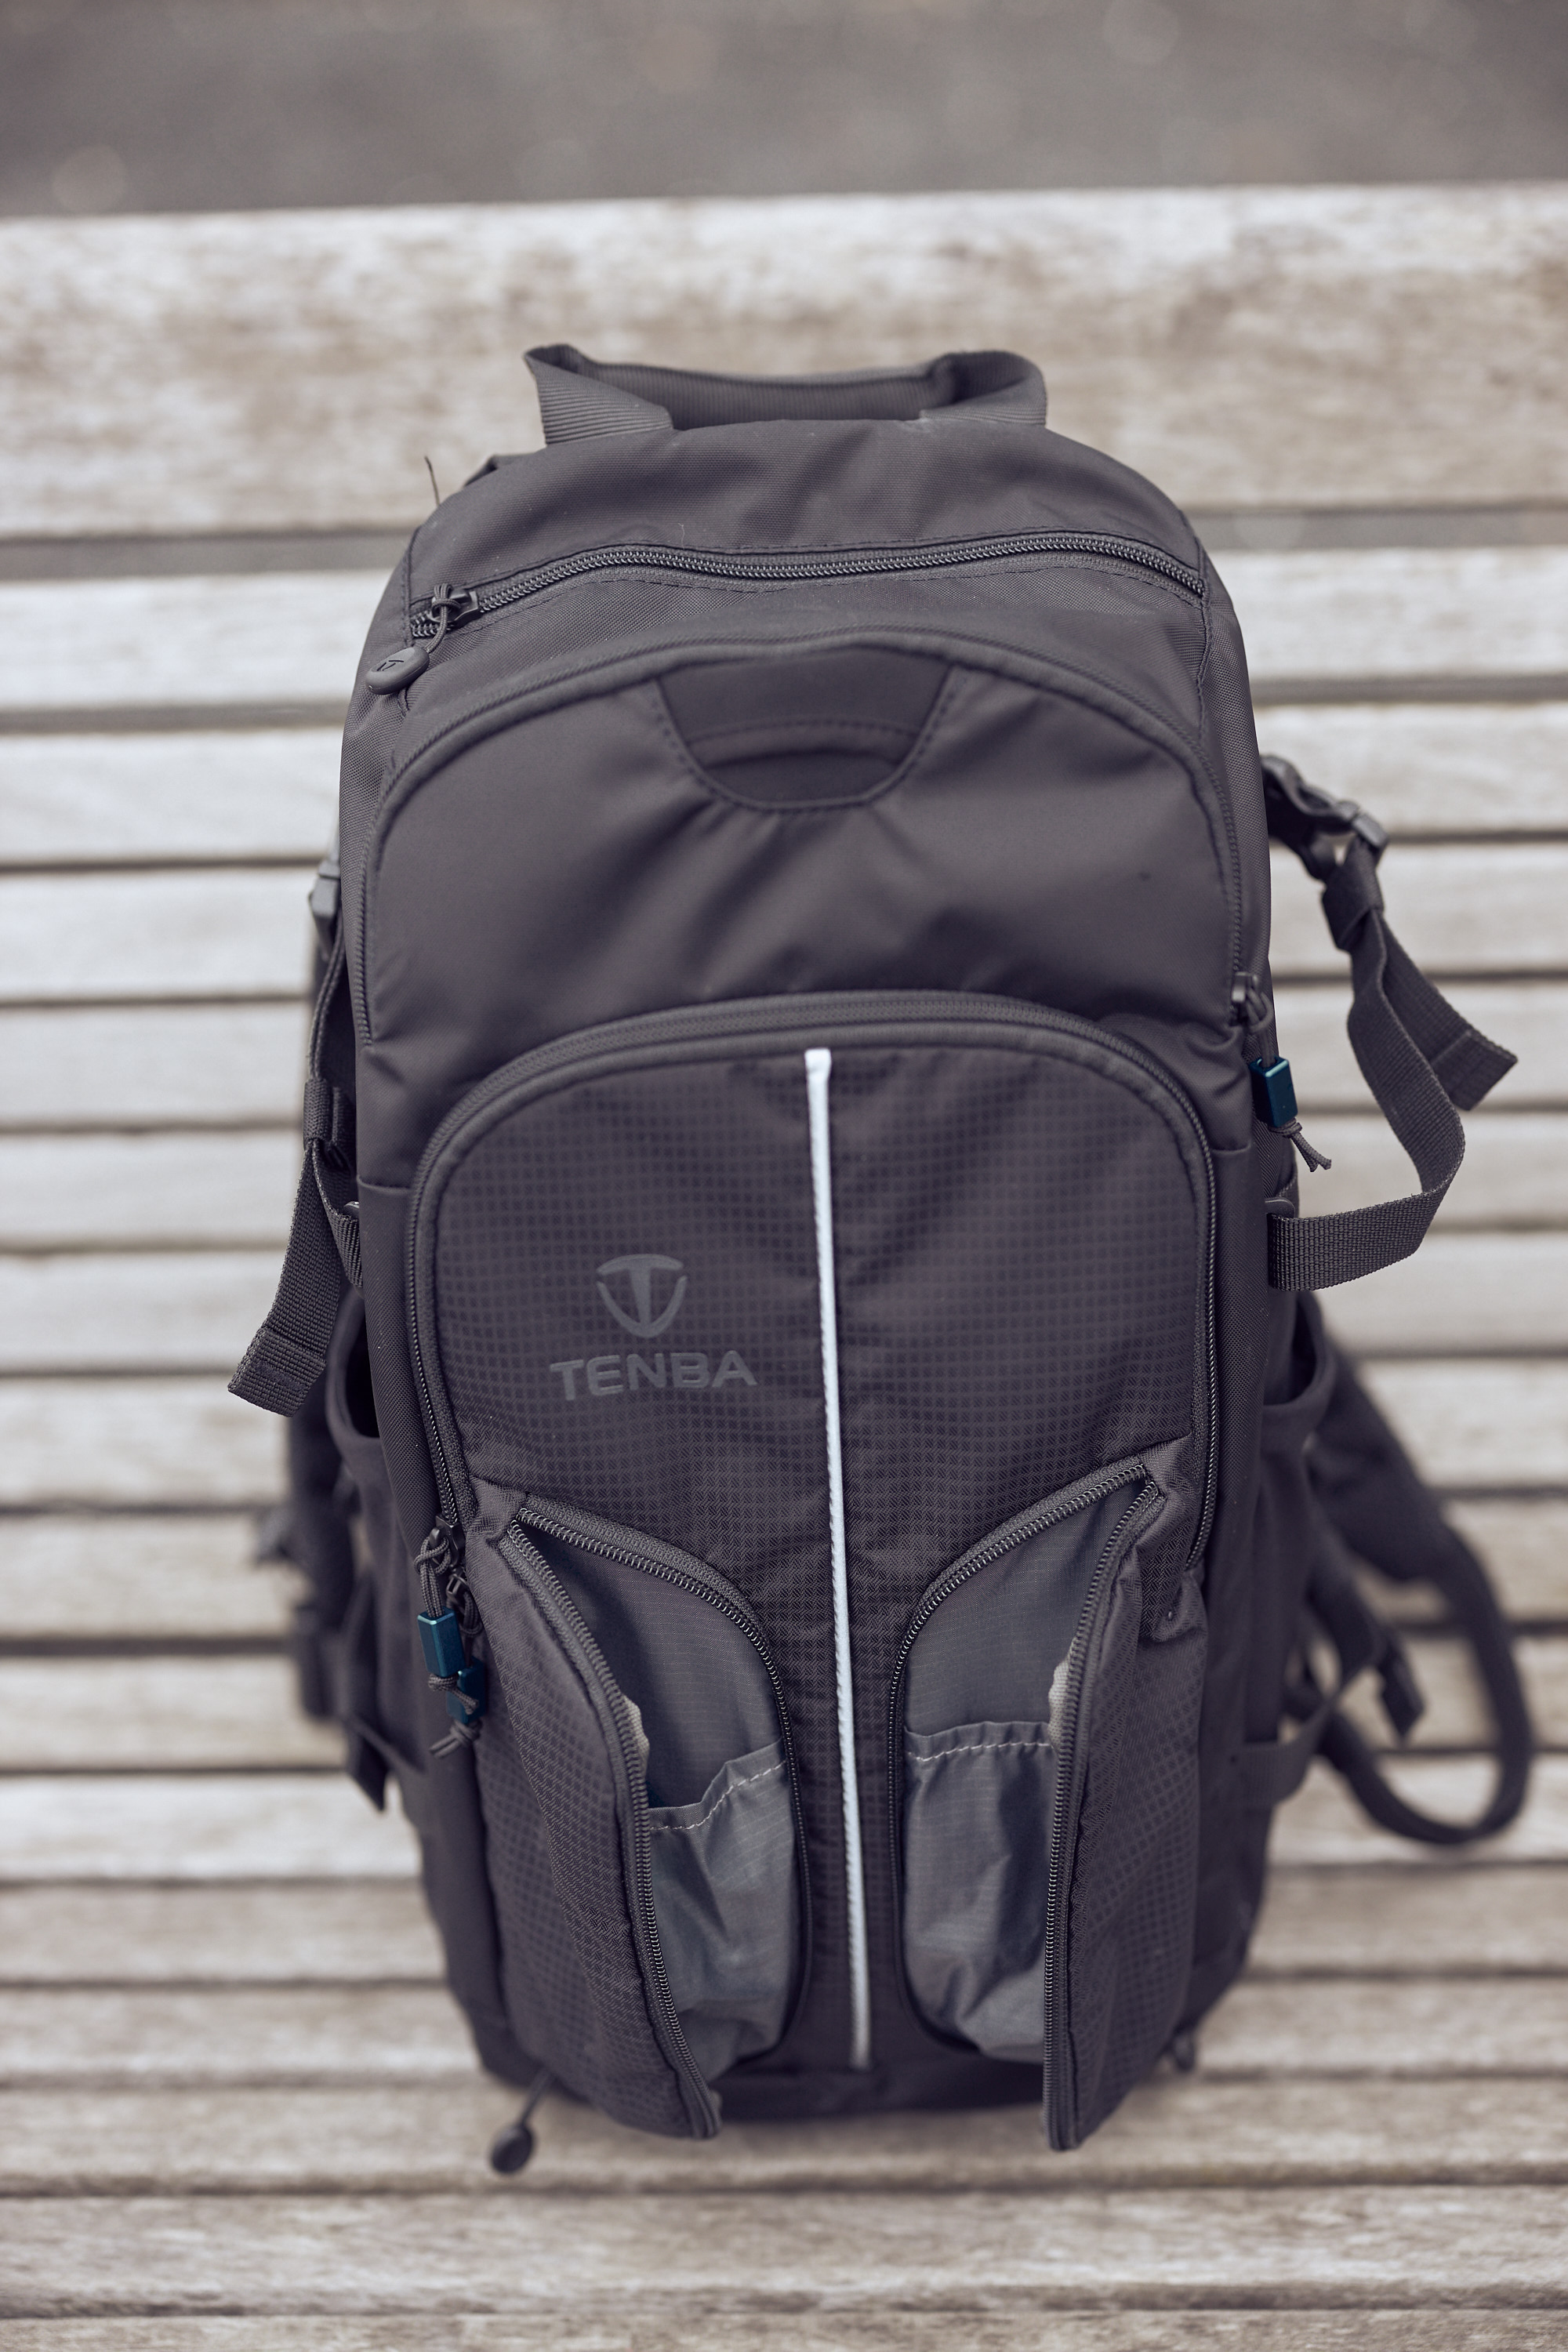 Shootout Review: (The 16L DSLR Bag) Backpack Tenba In-Between